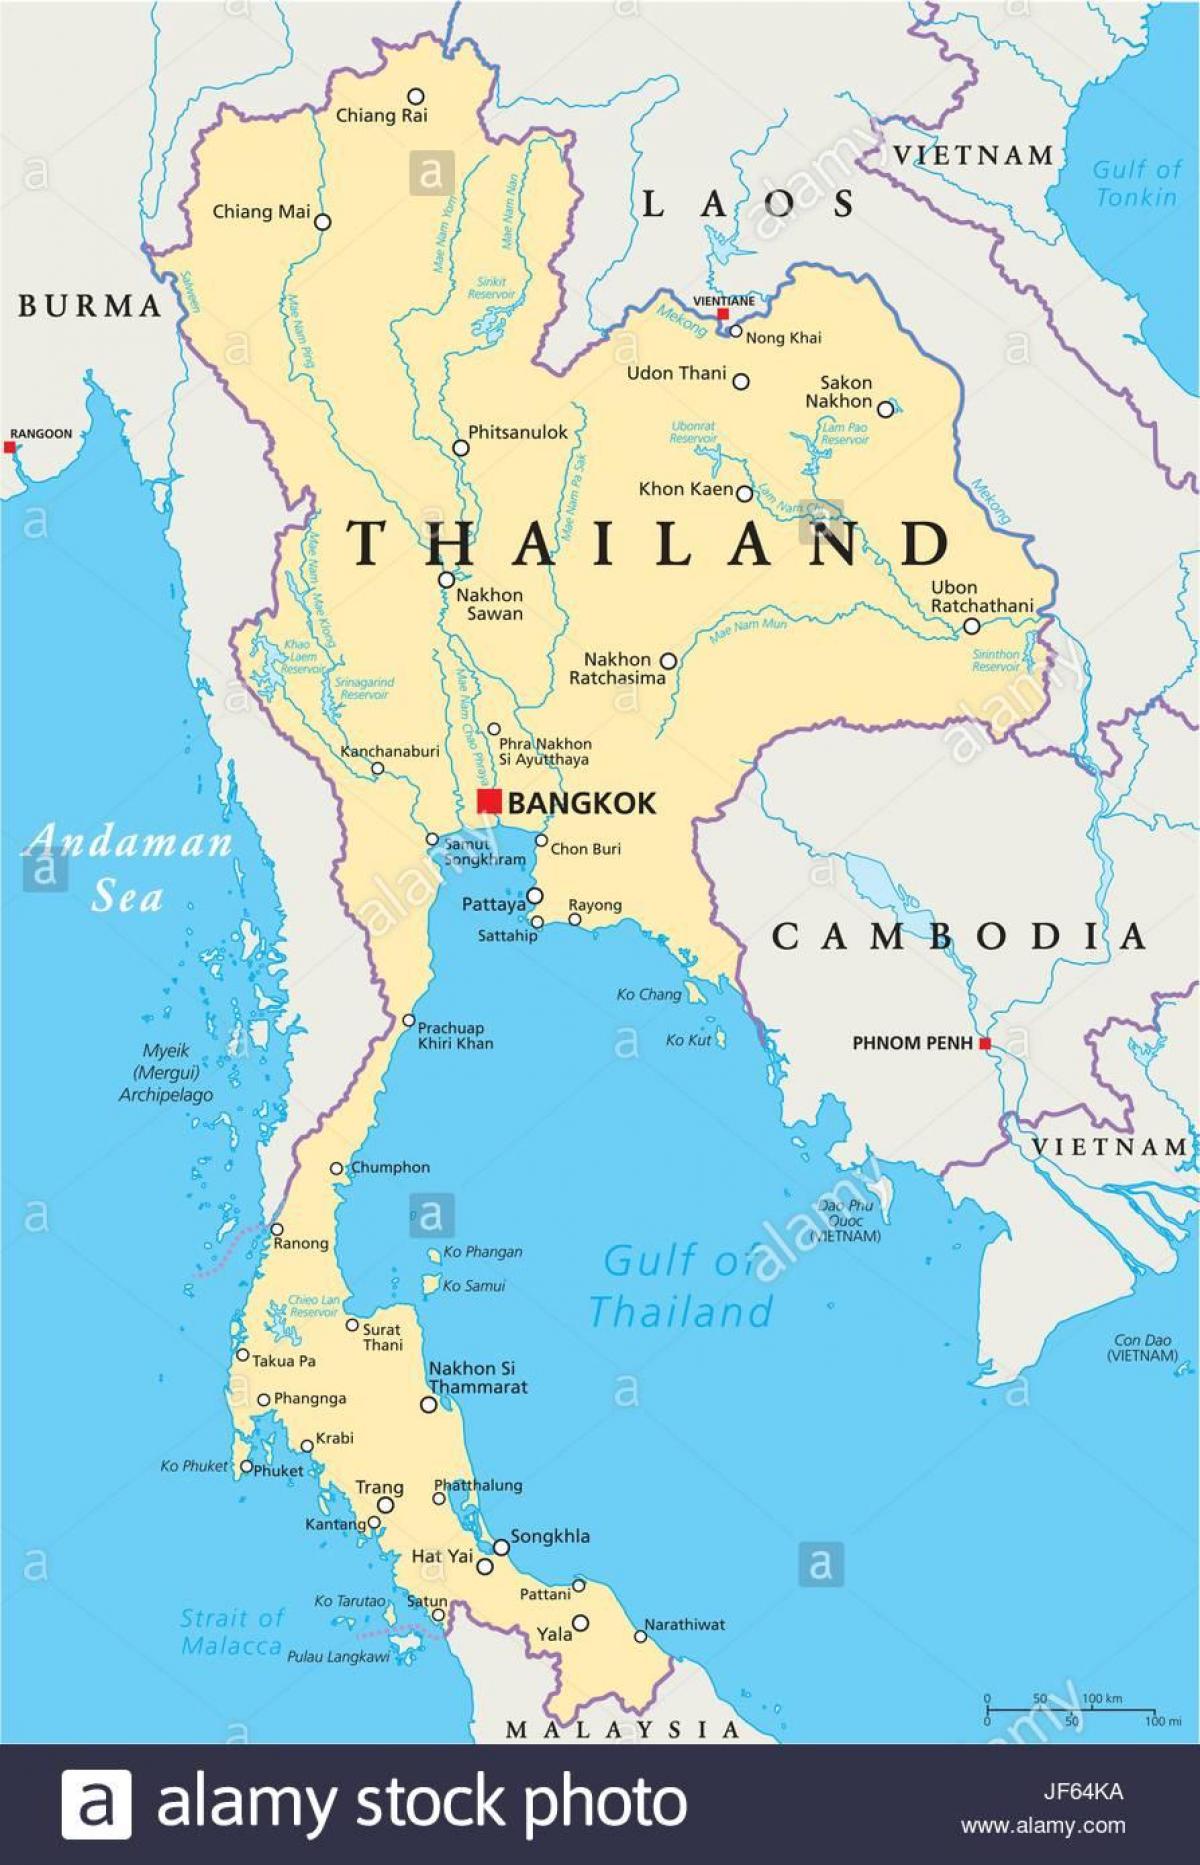 bangkok thailandia mappa del mondo